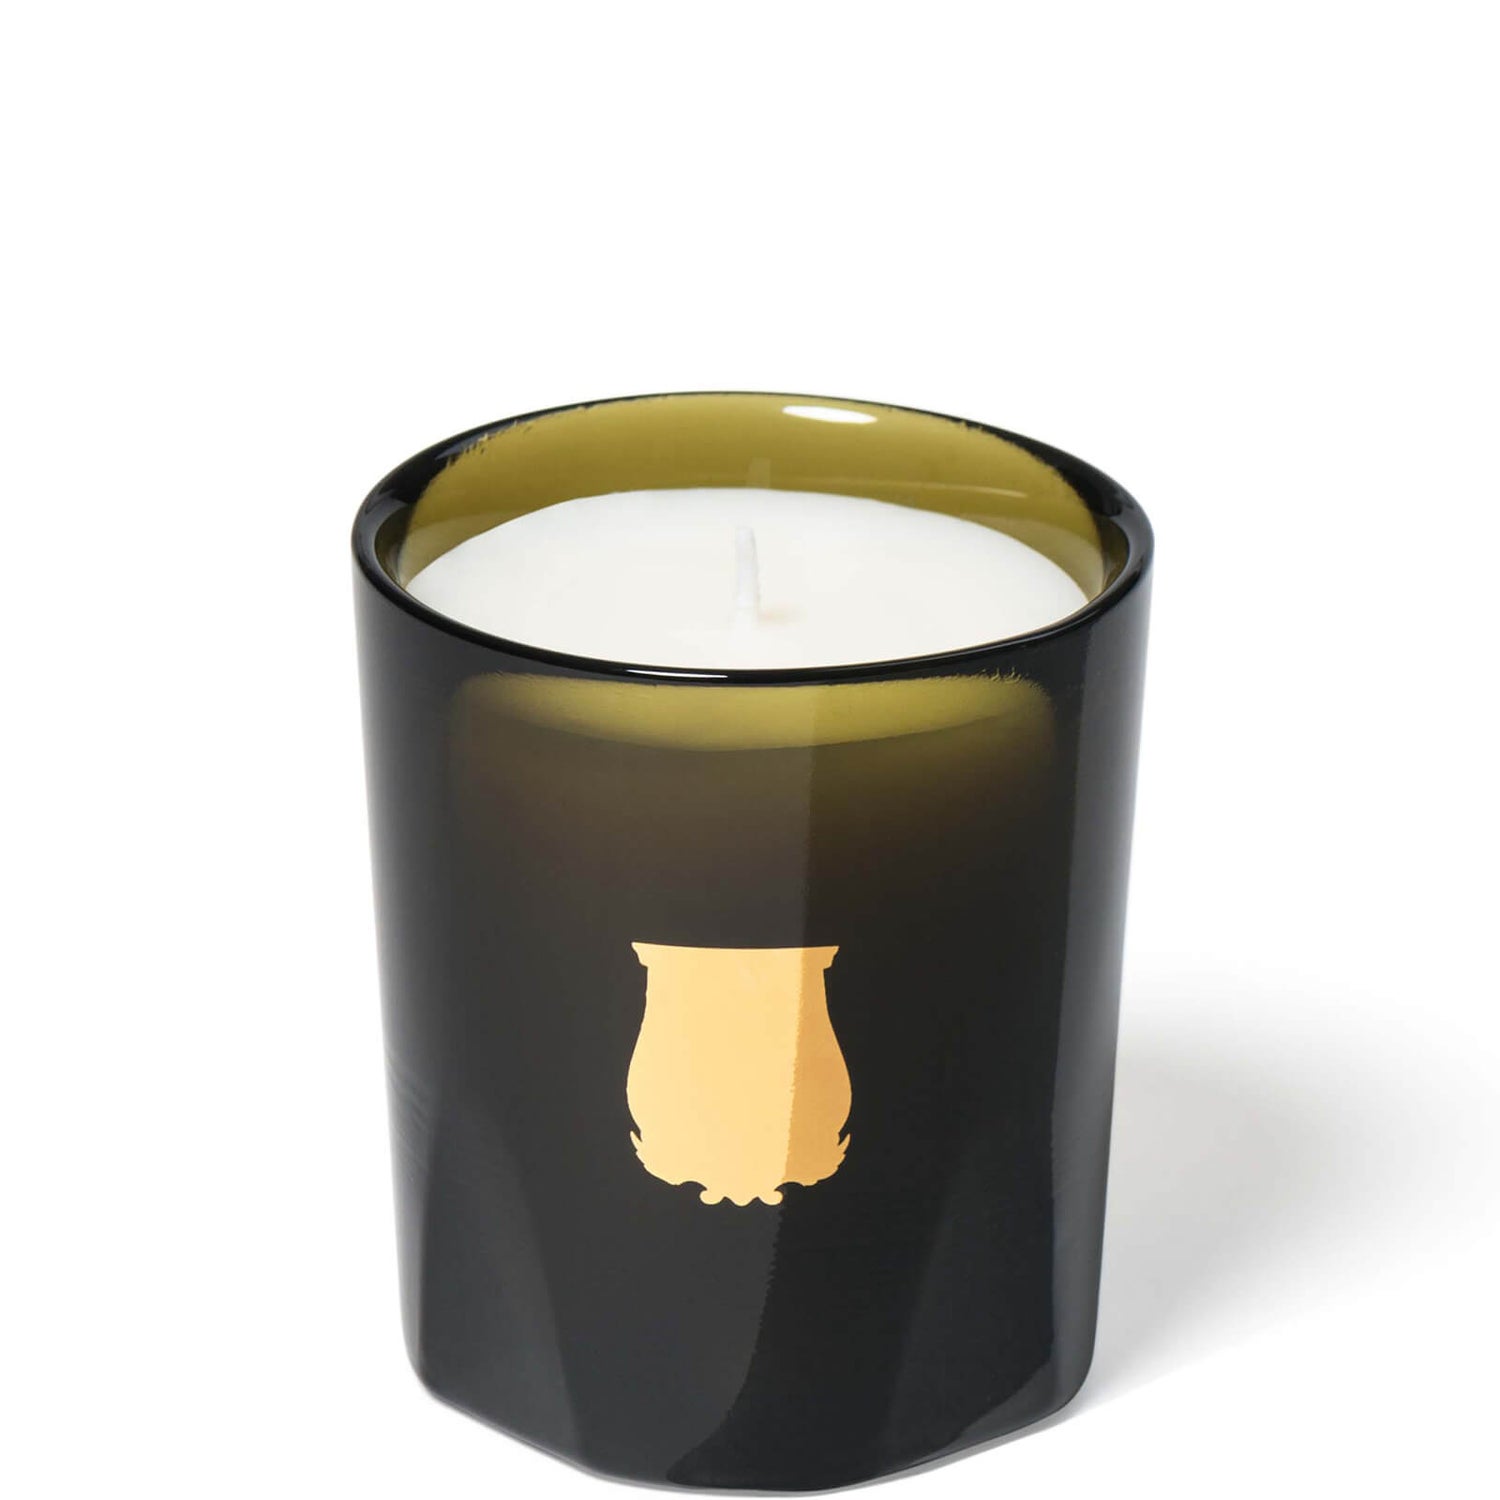 TRUDON Abd El Kader La Petite Bougie Candle - Morrocan Mint